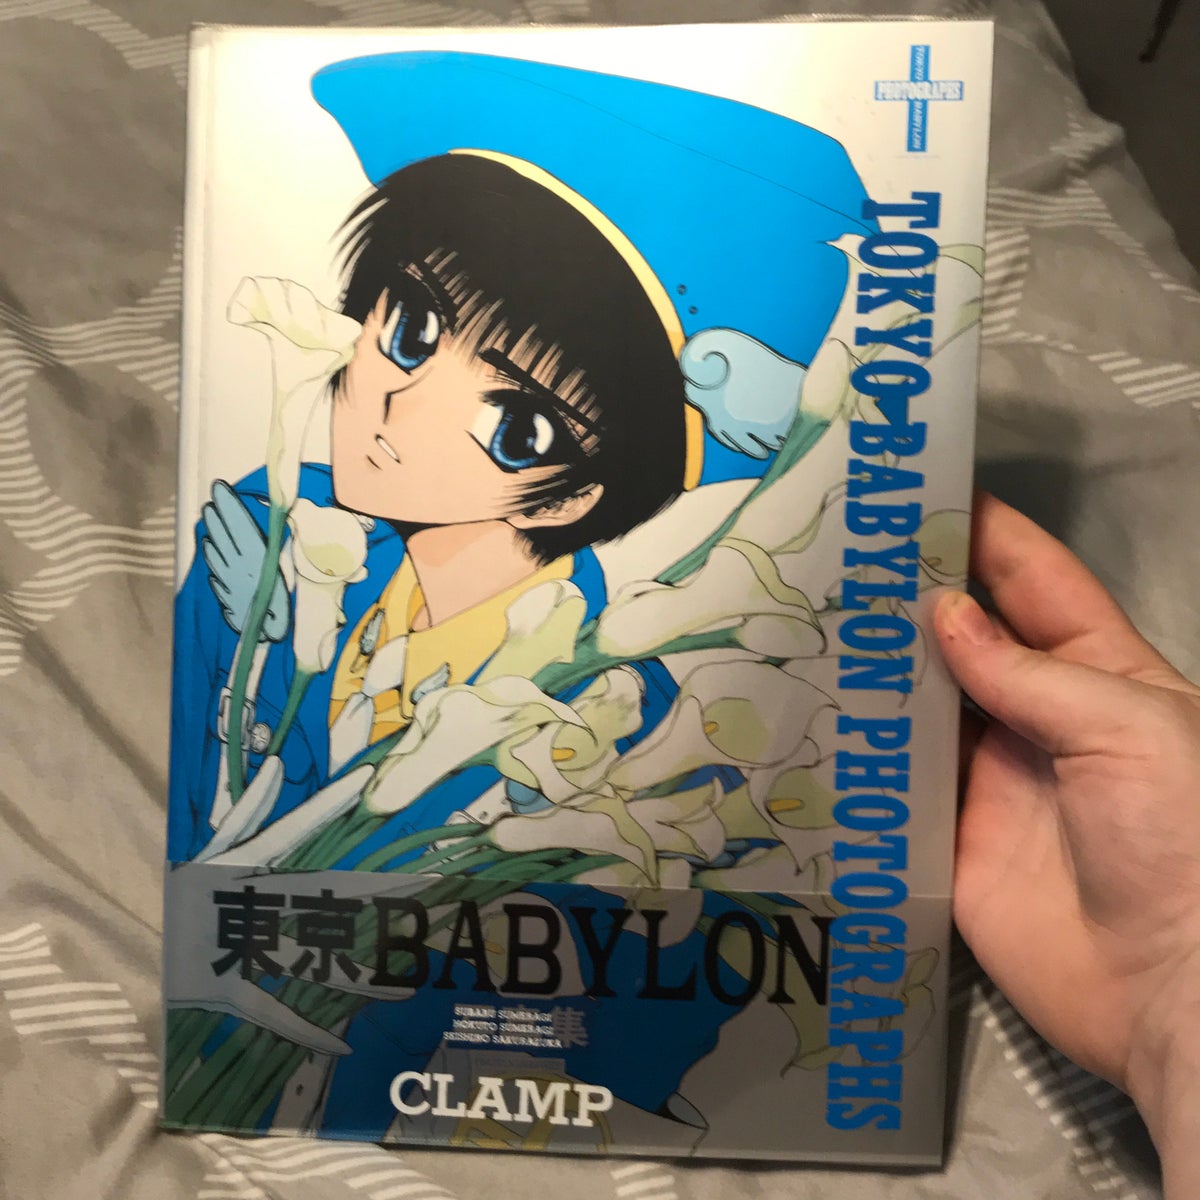 Tokyo Babylon CLAMP artbook by CLAMP, Paperback | Pangobooks